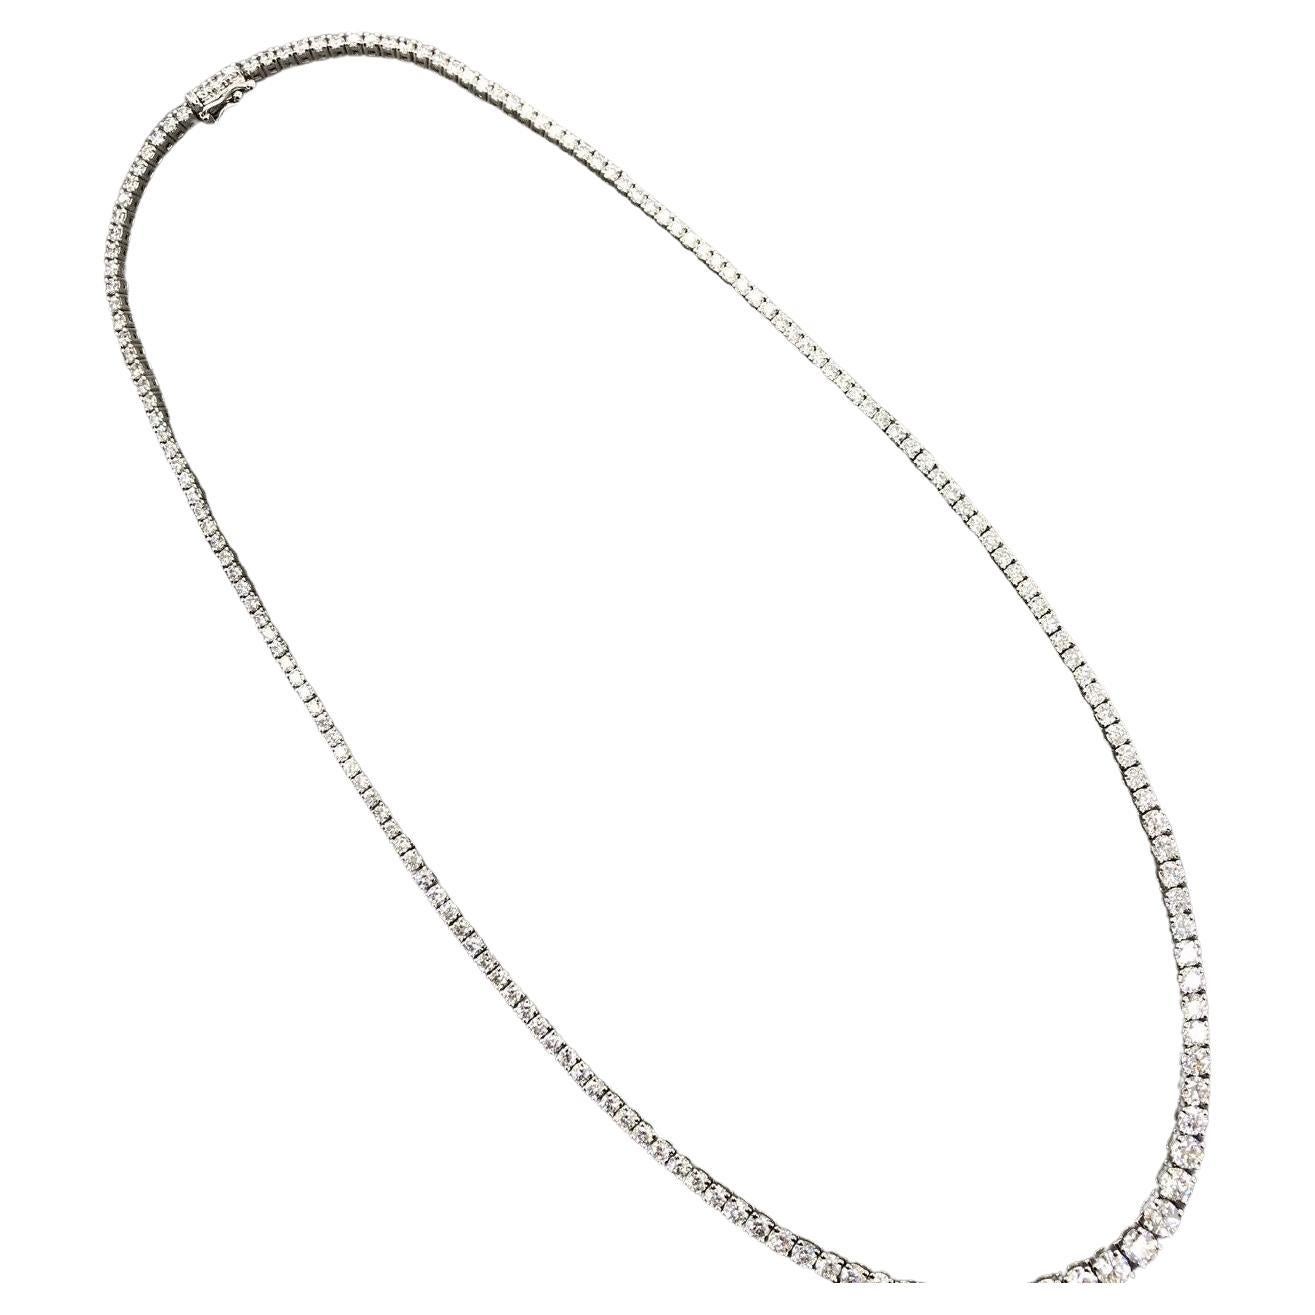 Contemporary 28 Carat Round Brilliant Cut Diamond Tennis Necklace Set in 18K White Gold For Sale